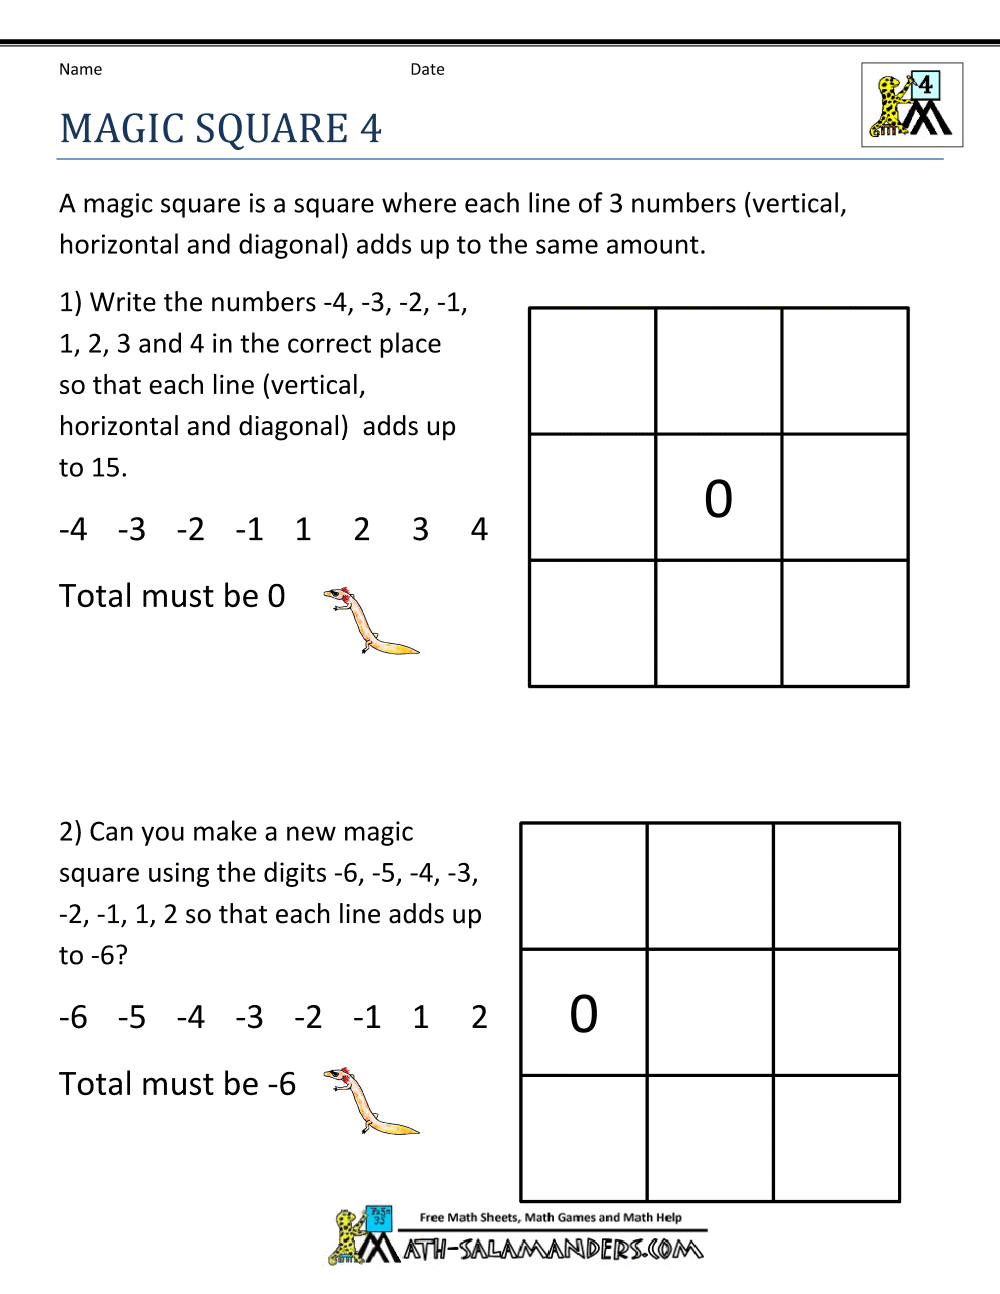 Cpm homework help geometry logic puzzles charts